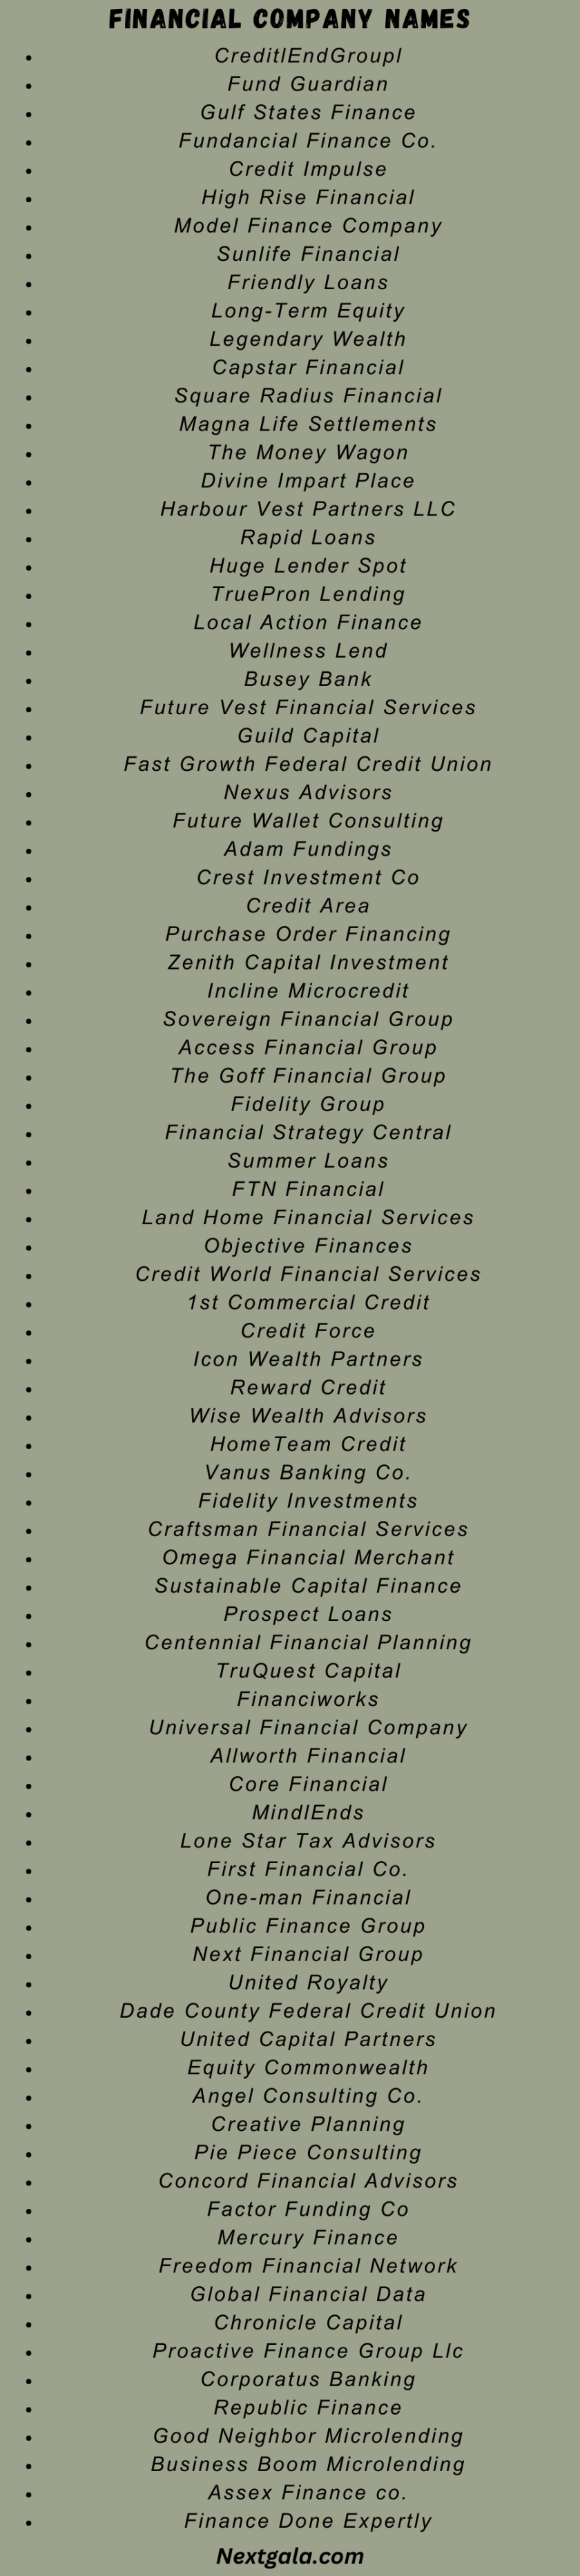 Financial Company Names